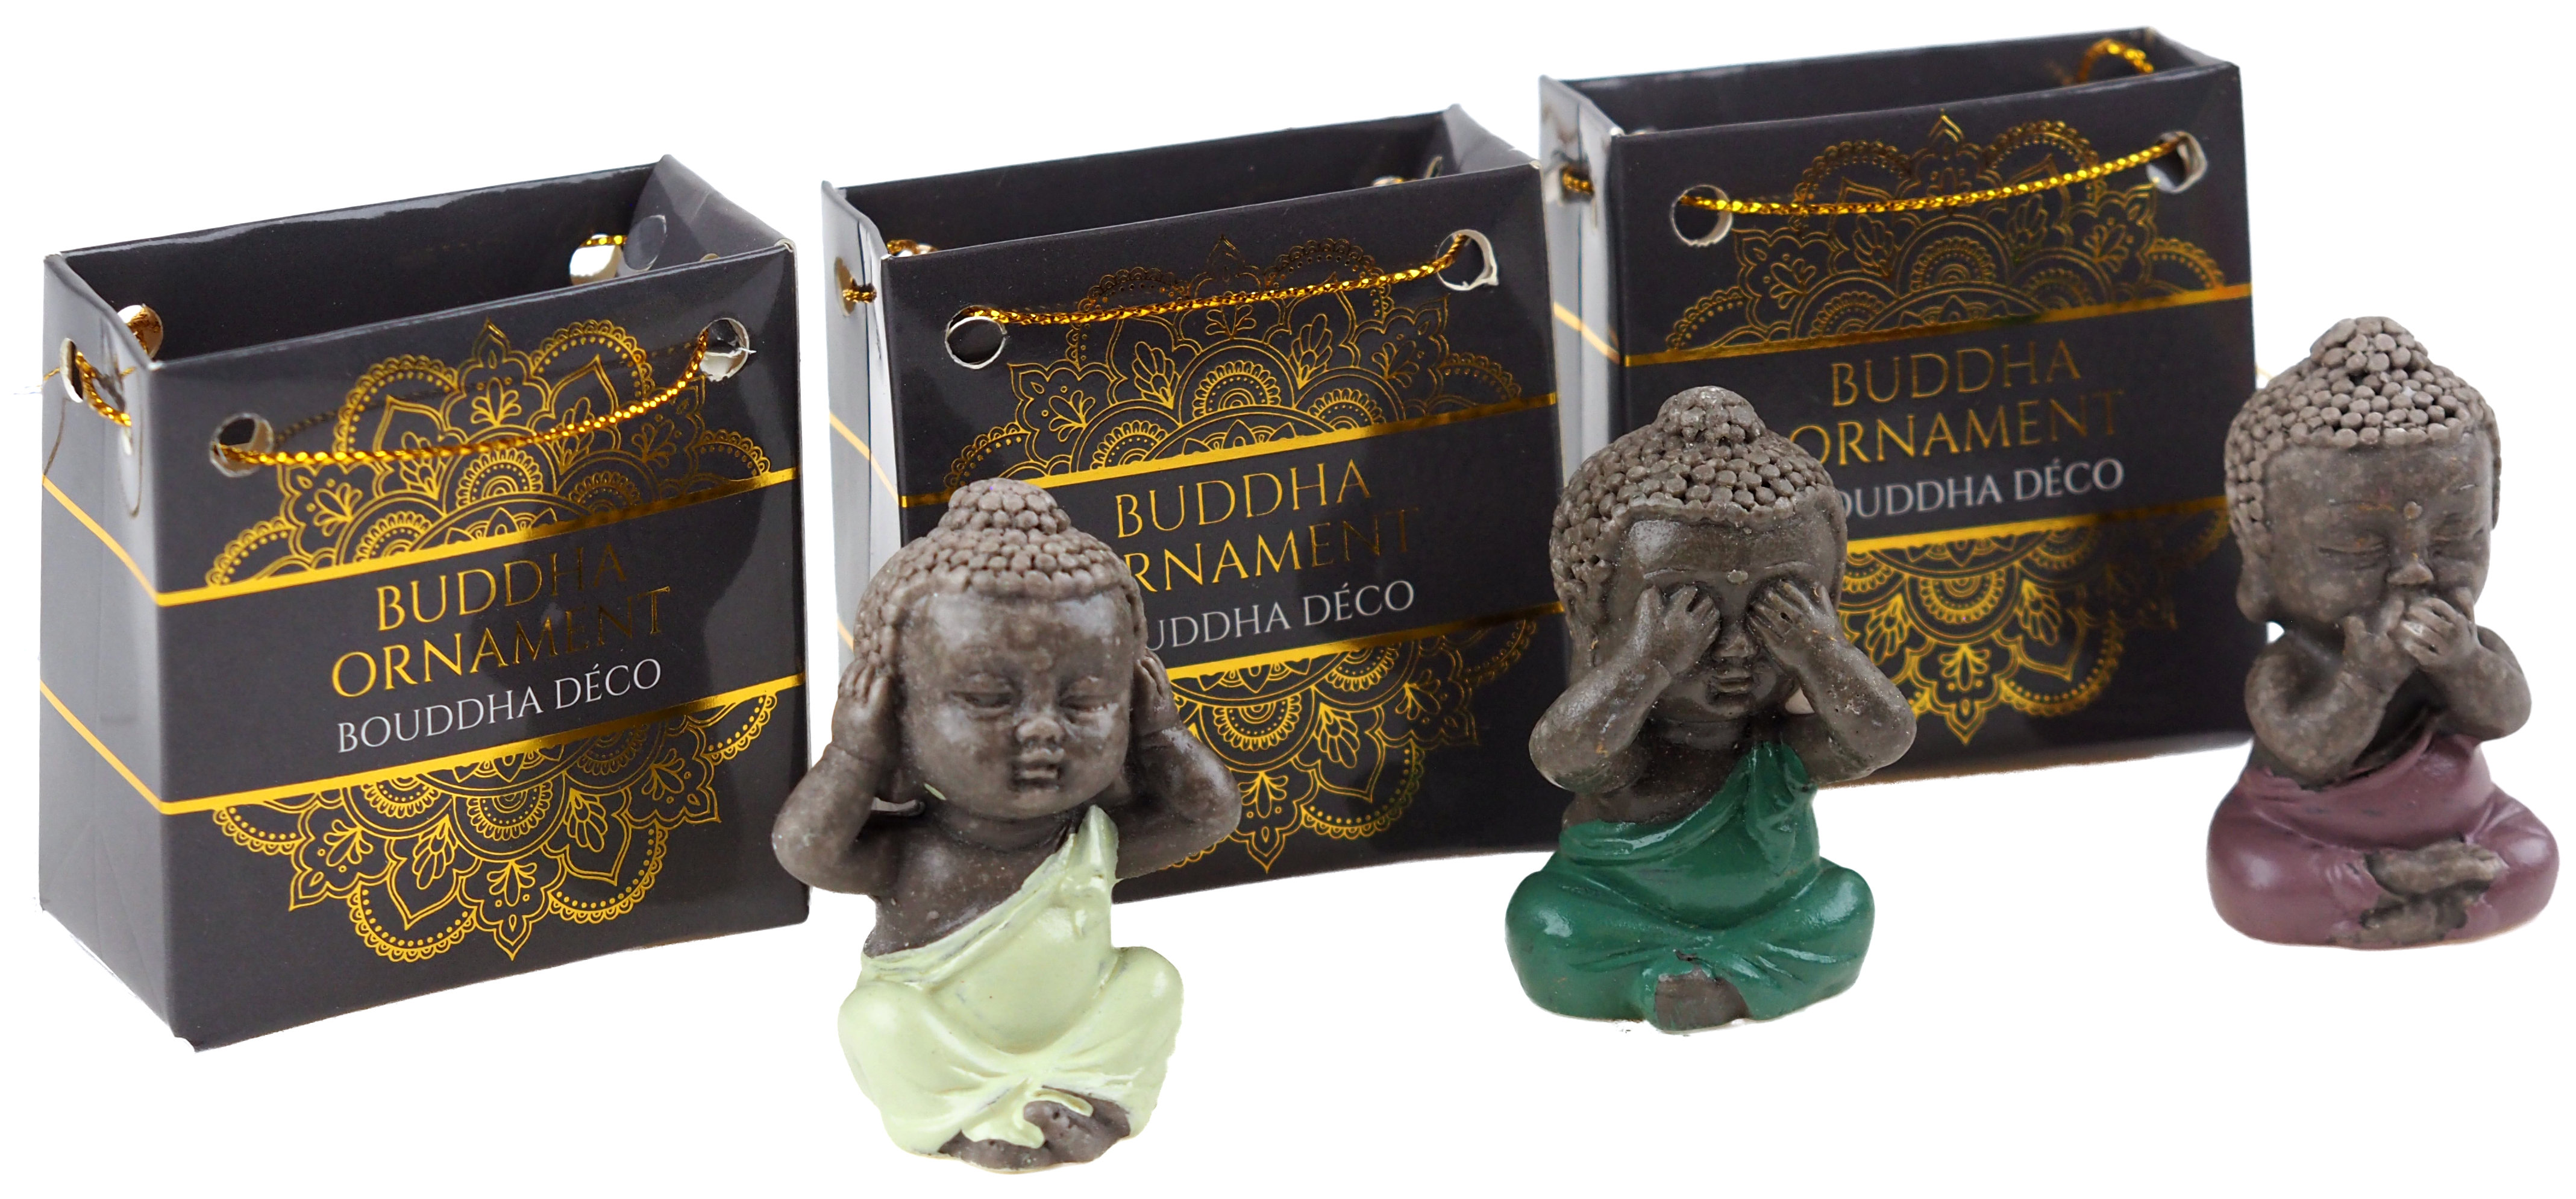 Lucky Mini Thai Buddha Keepsake Ornament In Bag See Speak Hear No Evil Set of 3 